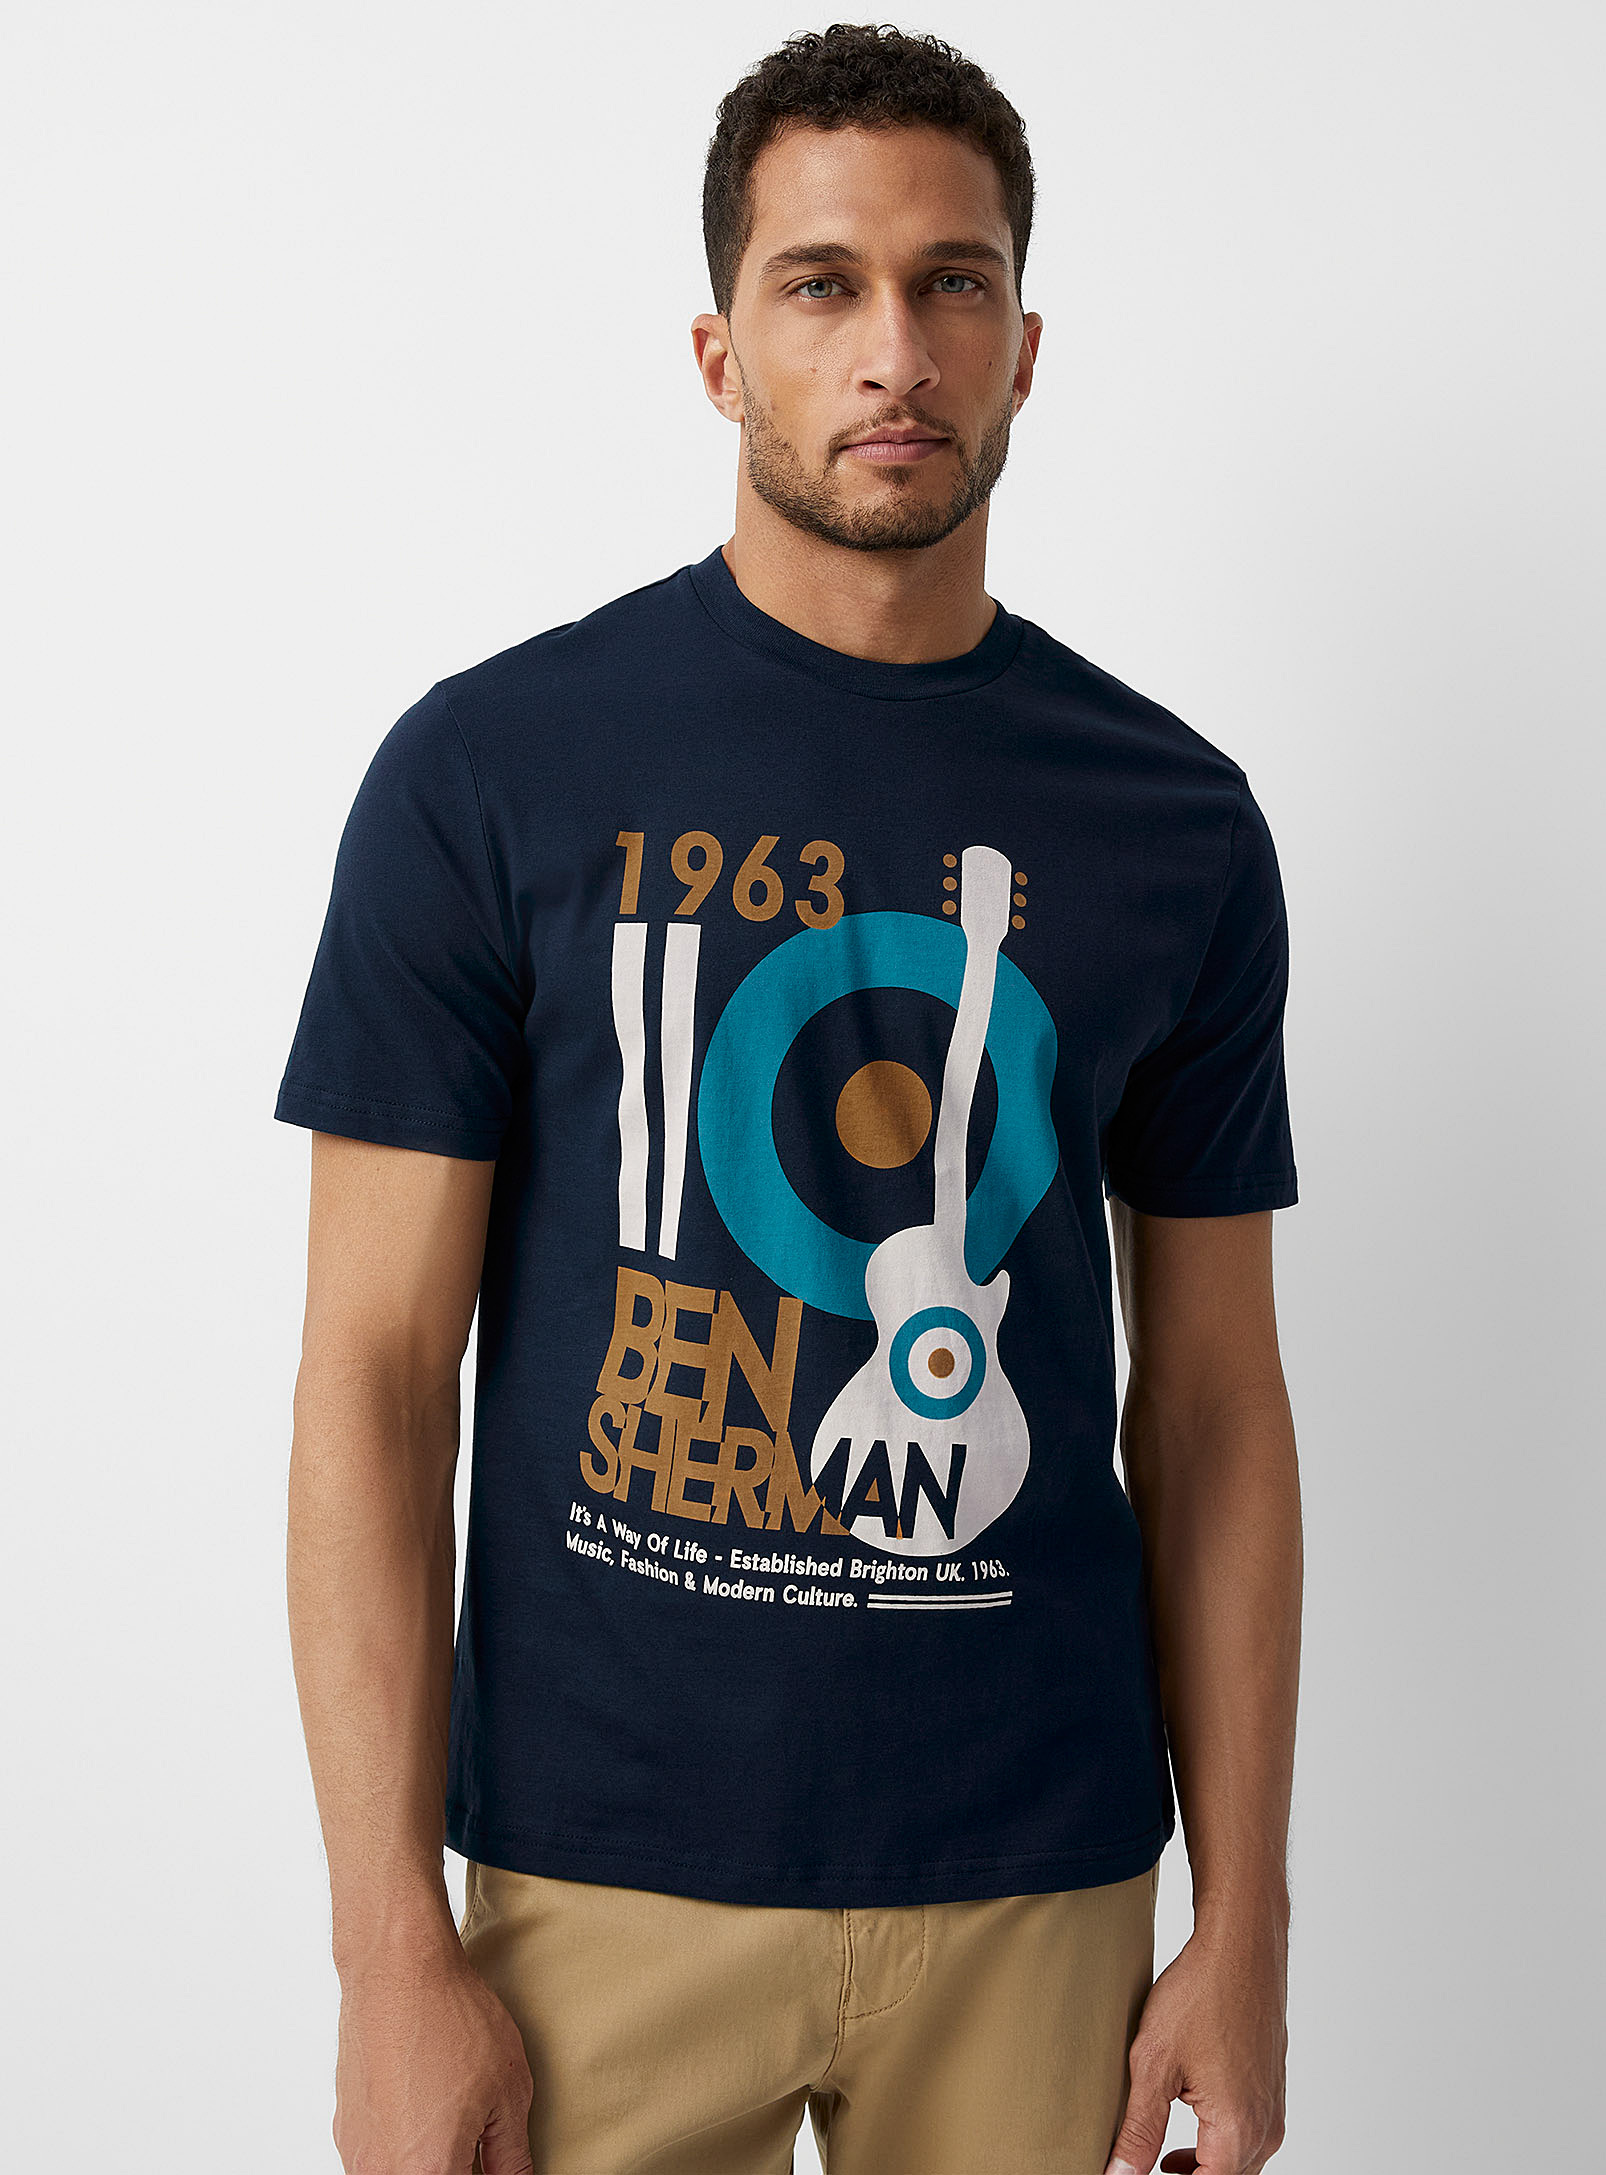 Ben Sherman - Men's 1963 music T-shirt